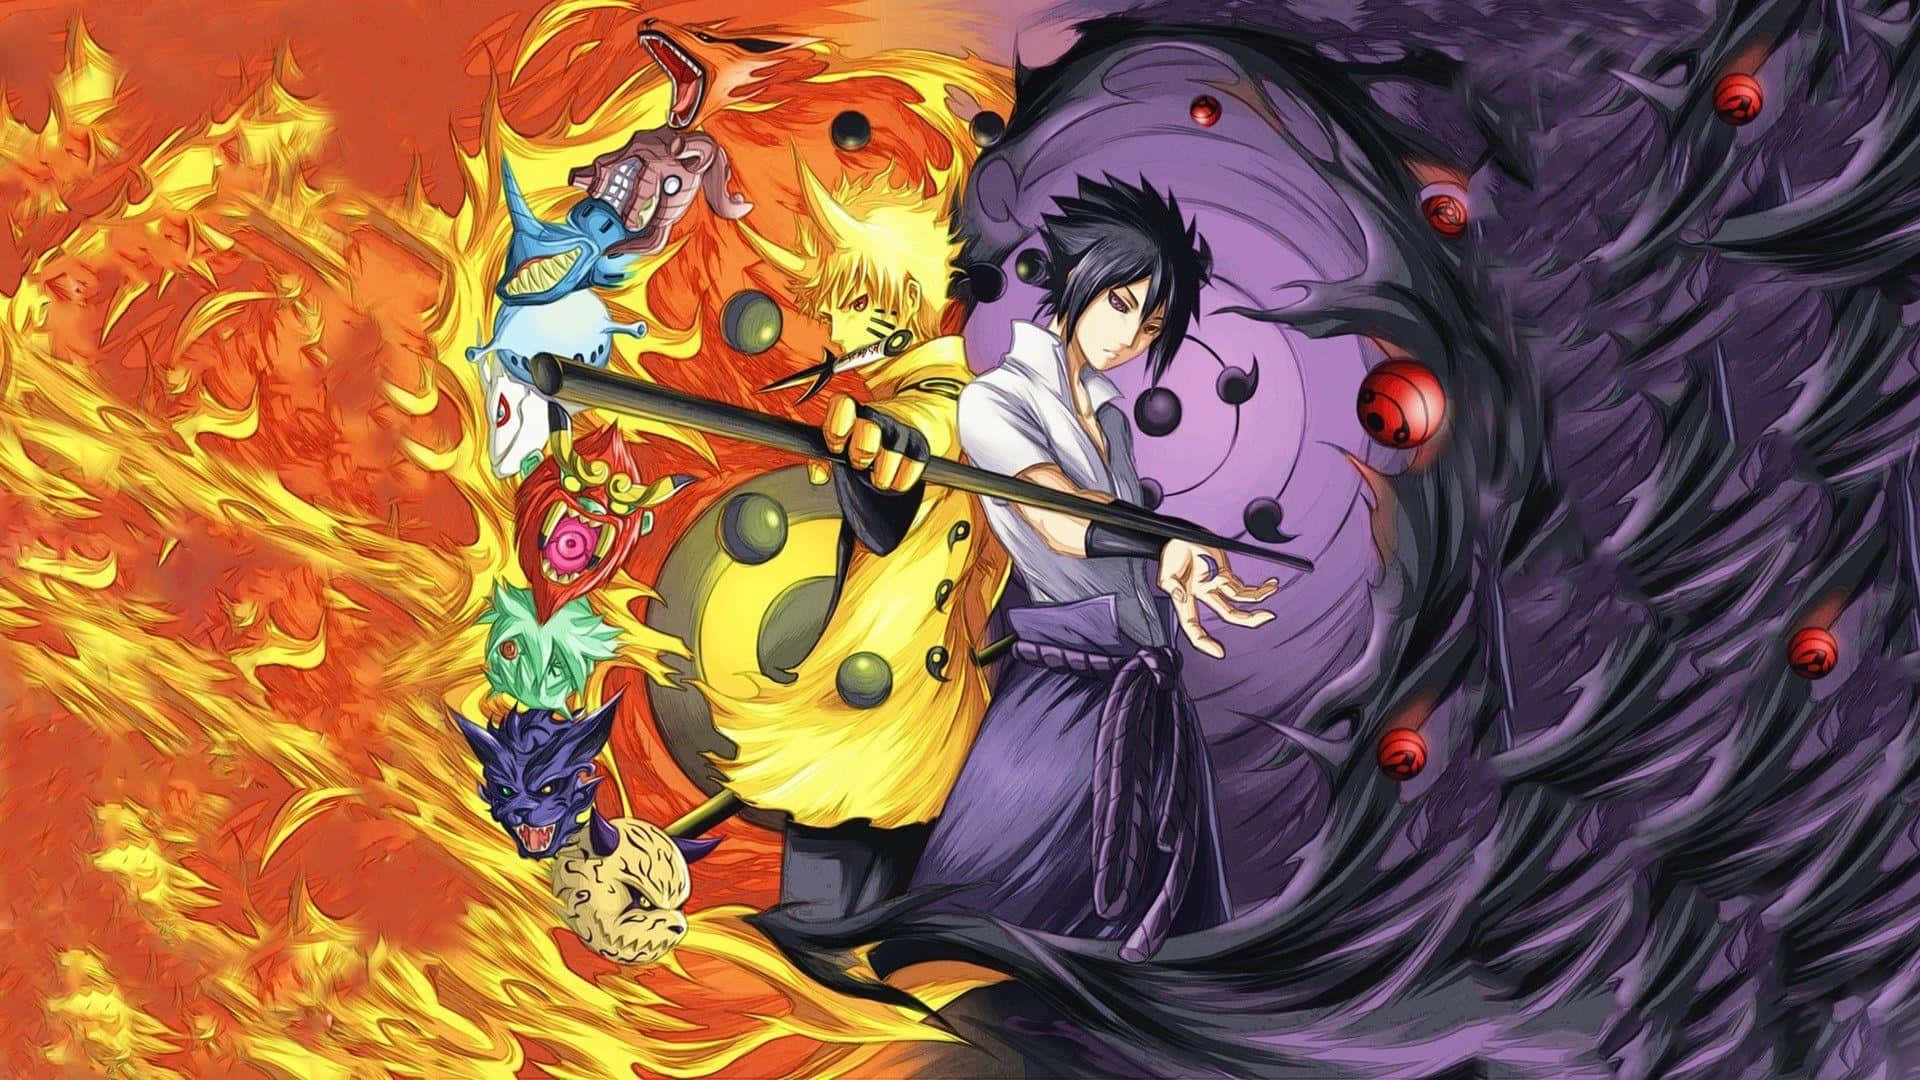 Uchiha Sasuke (Naruto Shippuden) Wallpaper Edit by NikoAkemi on